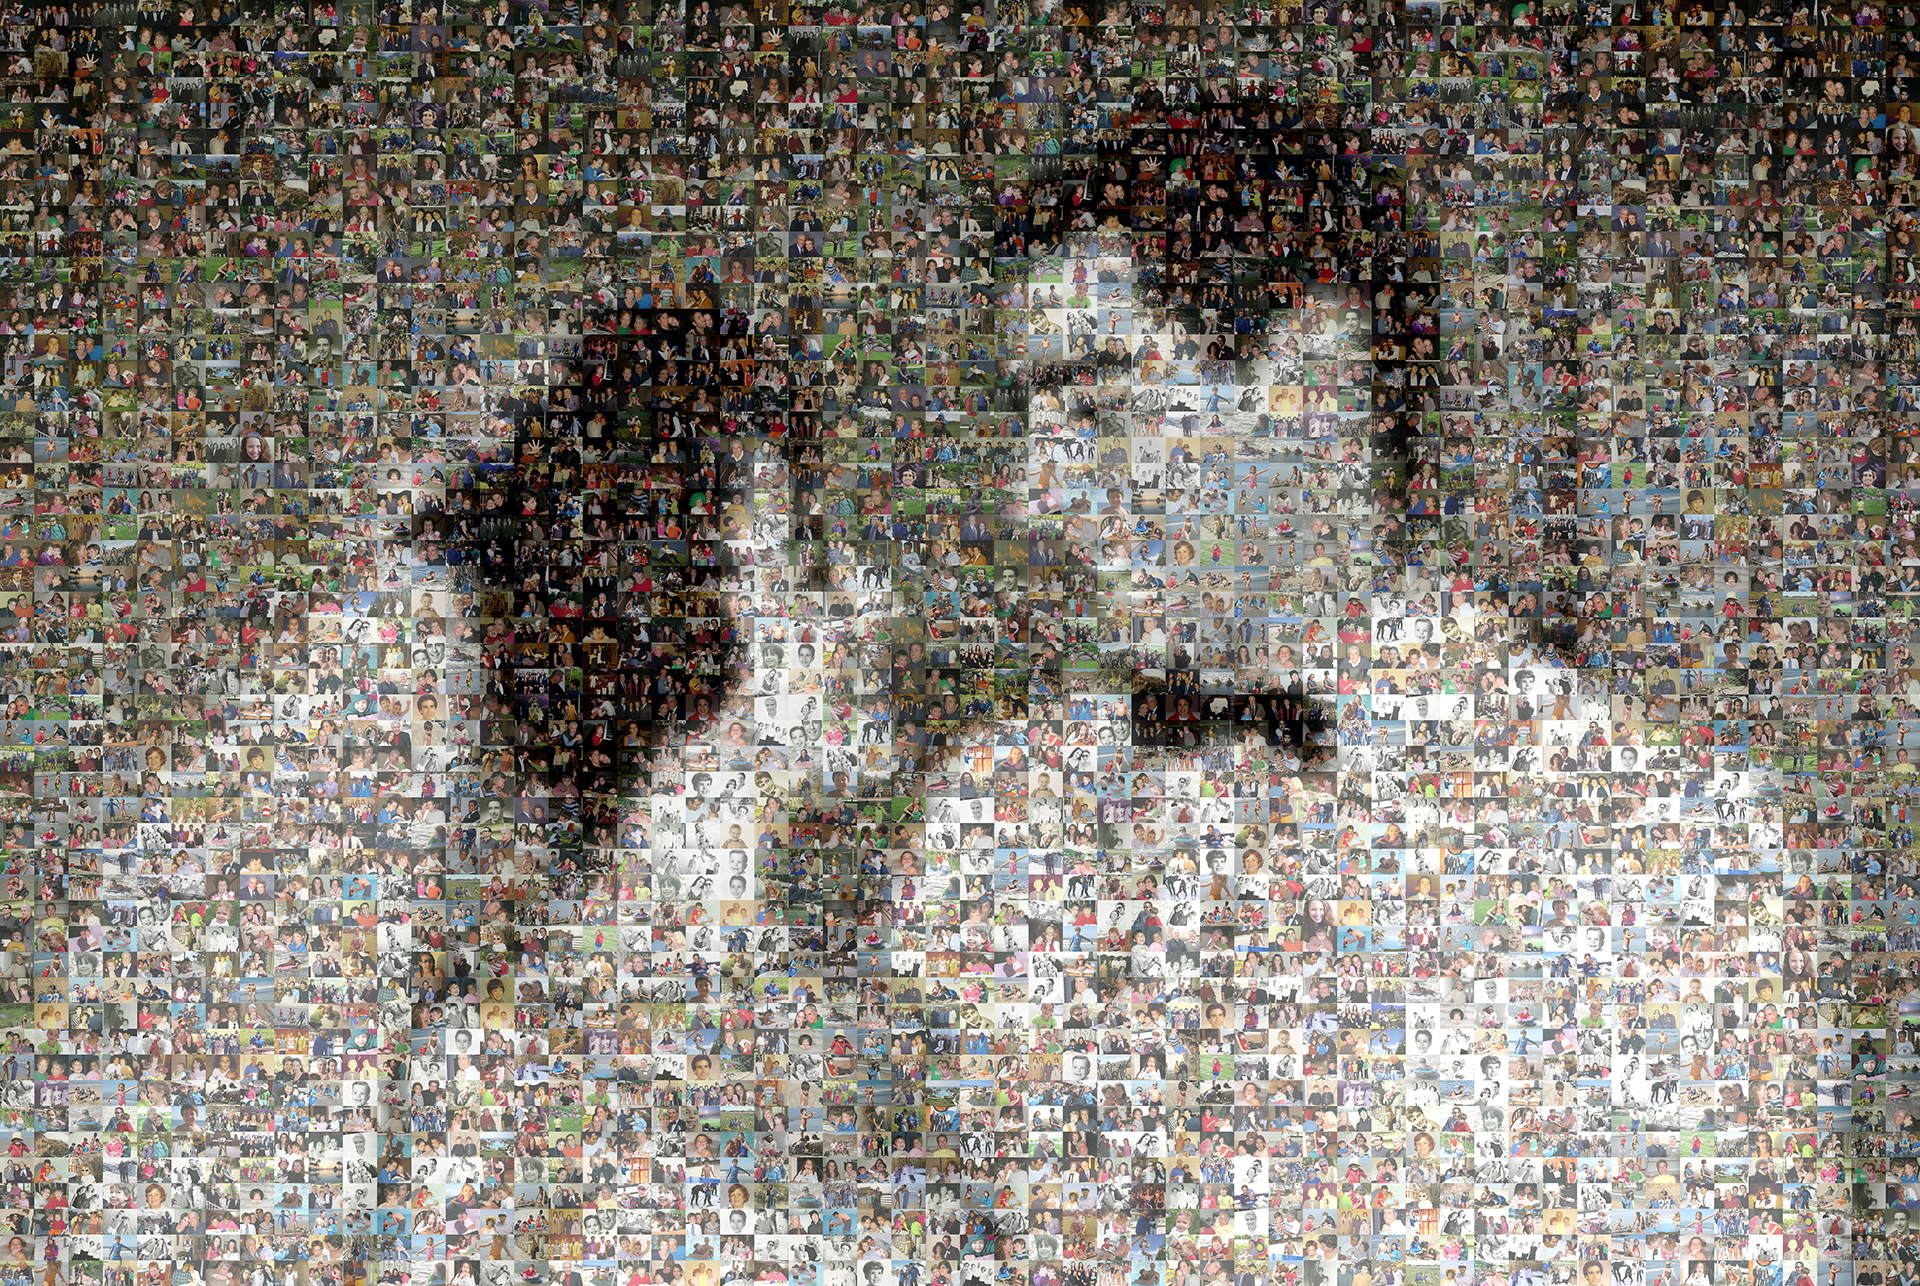 photo mosaic created using 607 lifetime photos